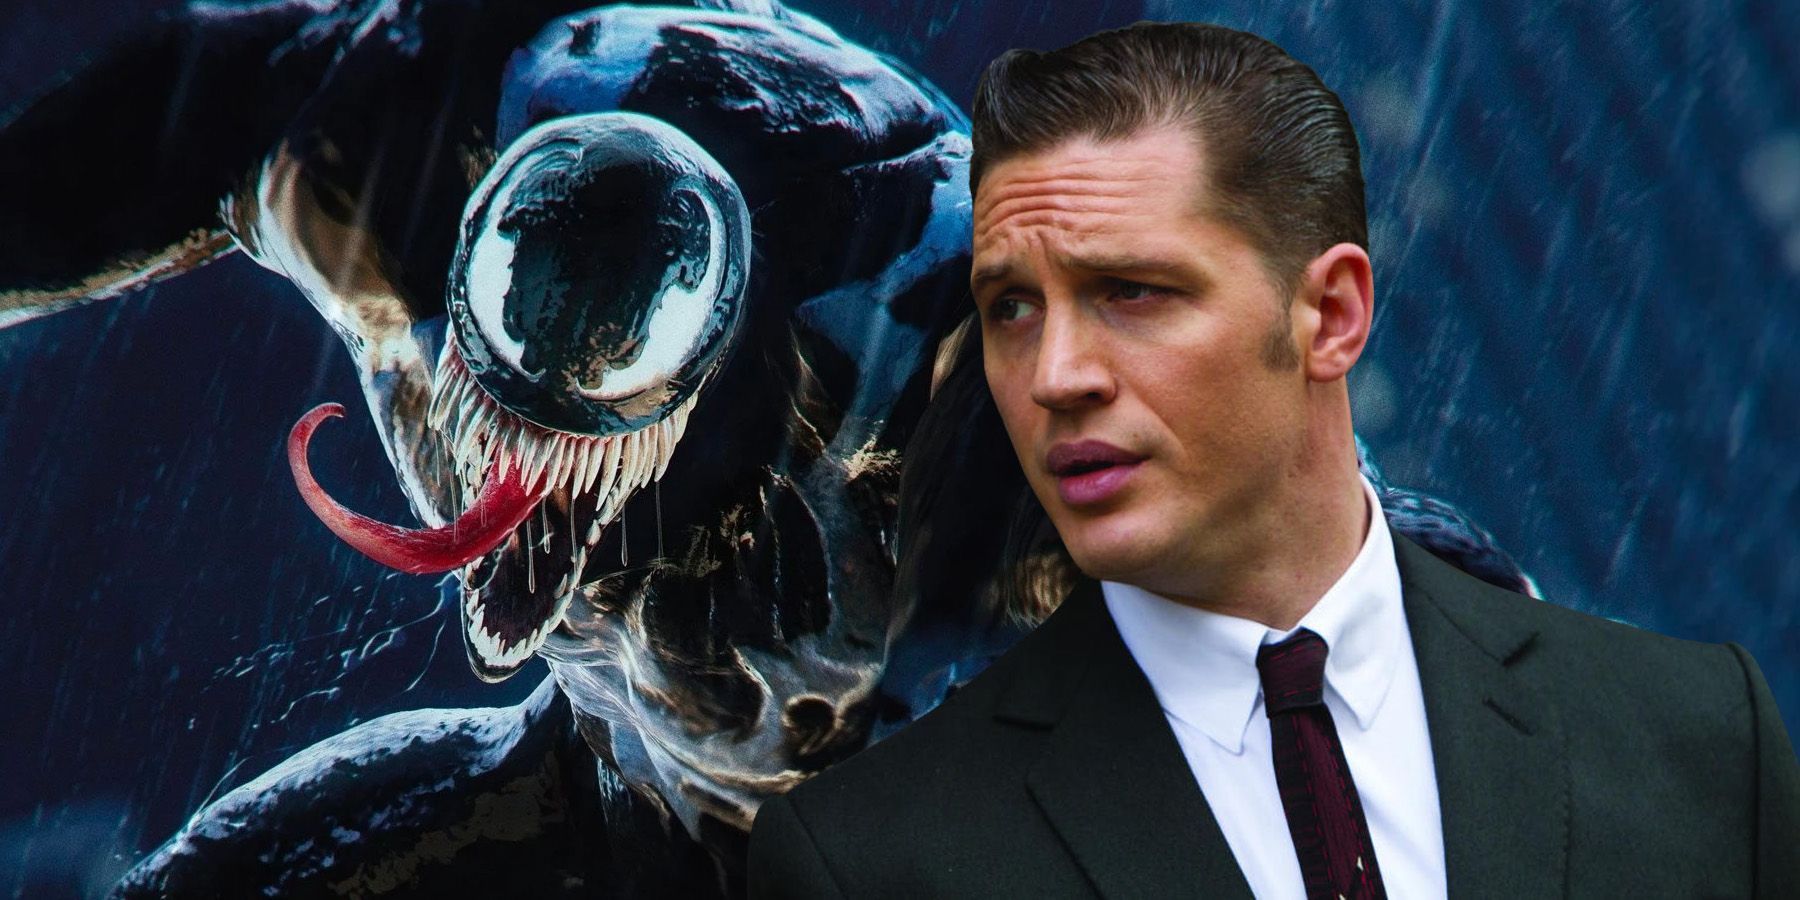 Spider-Man 2: Candyman actor Tony Todd praises Venom role